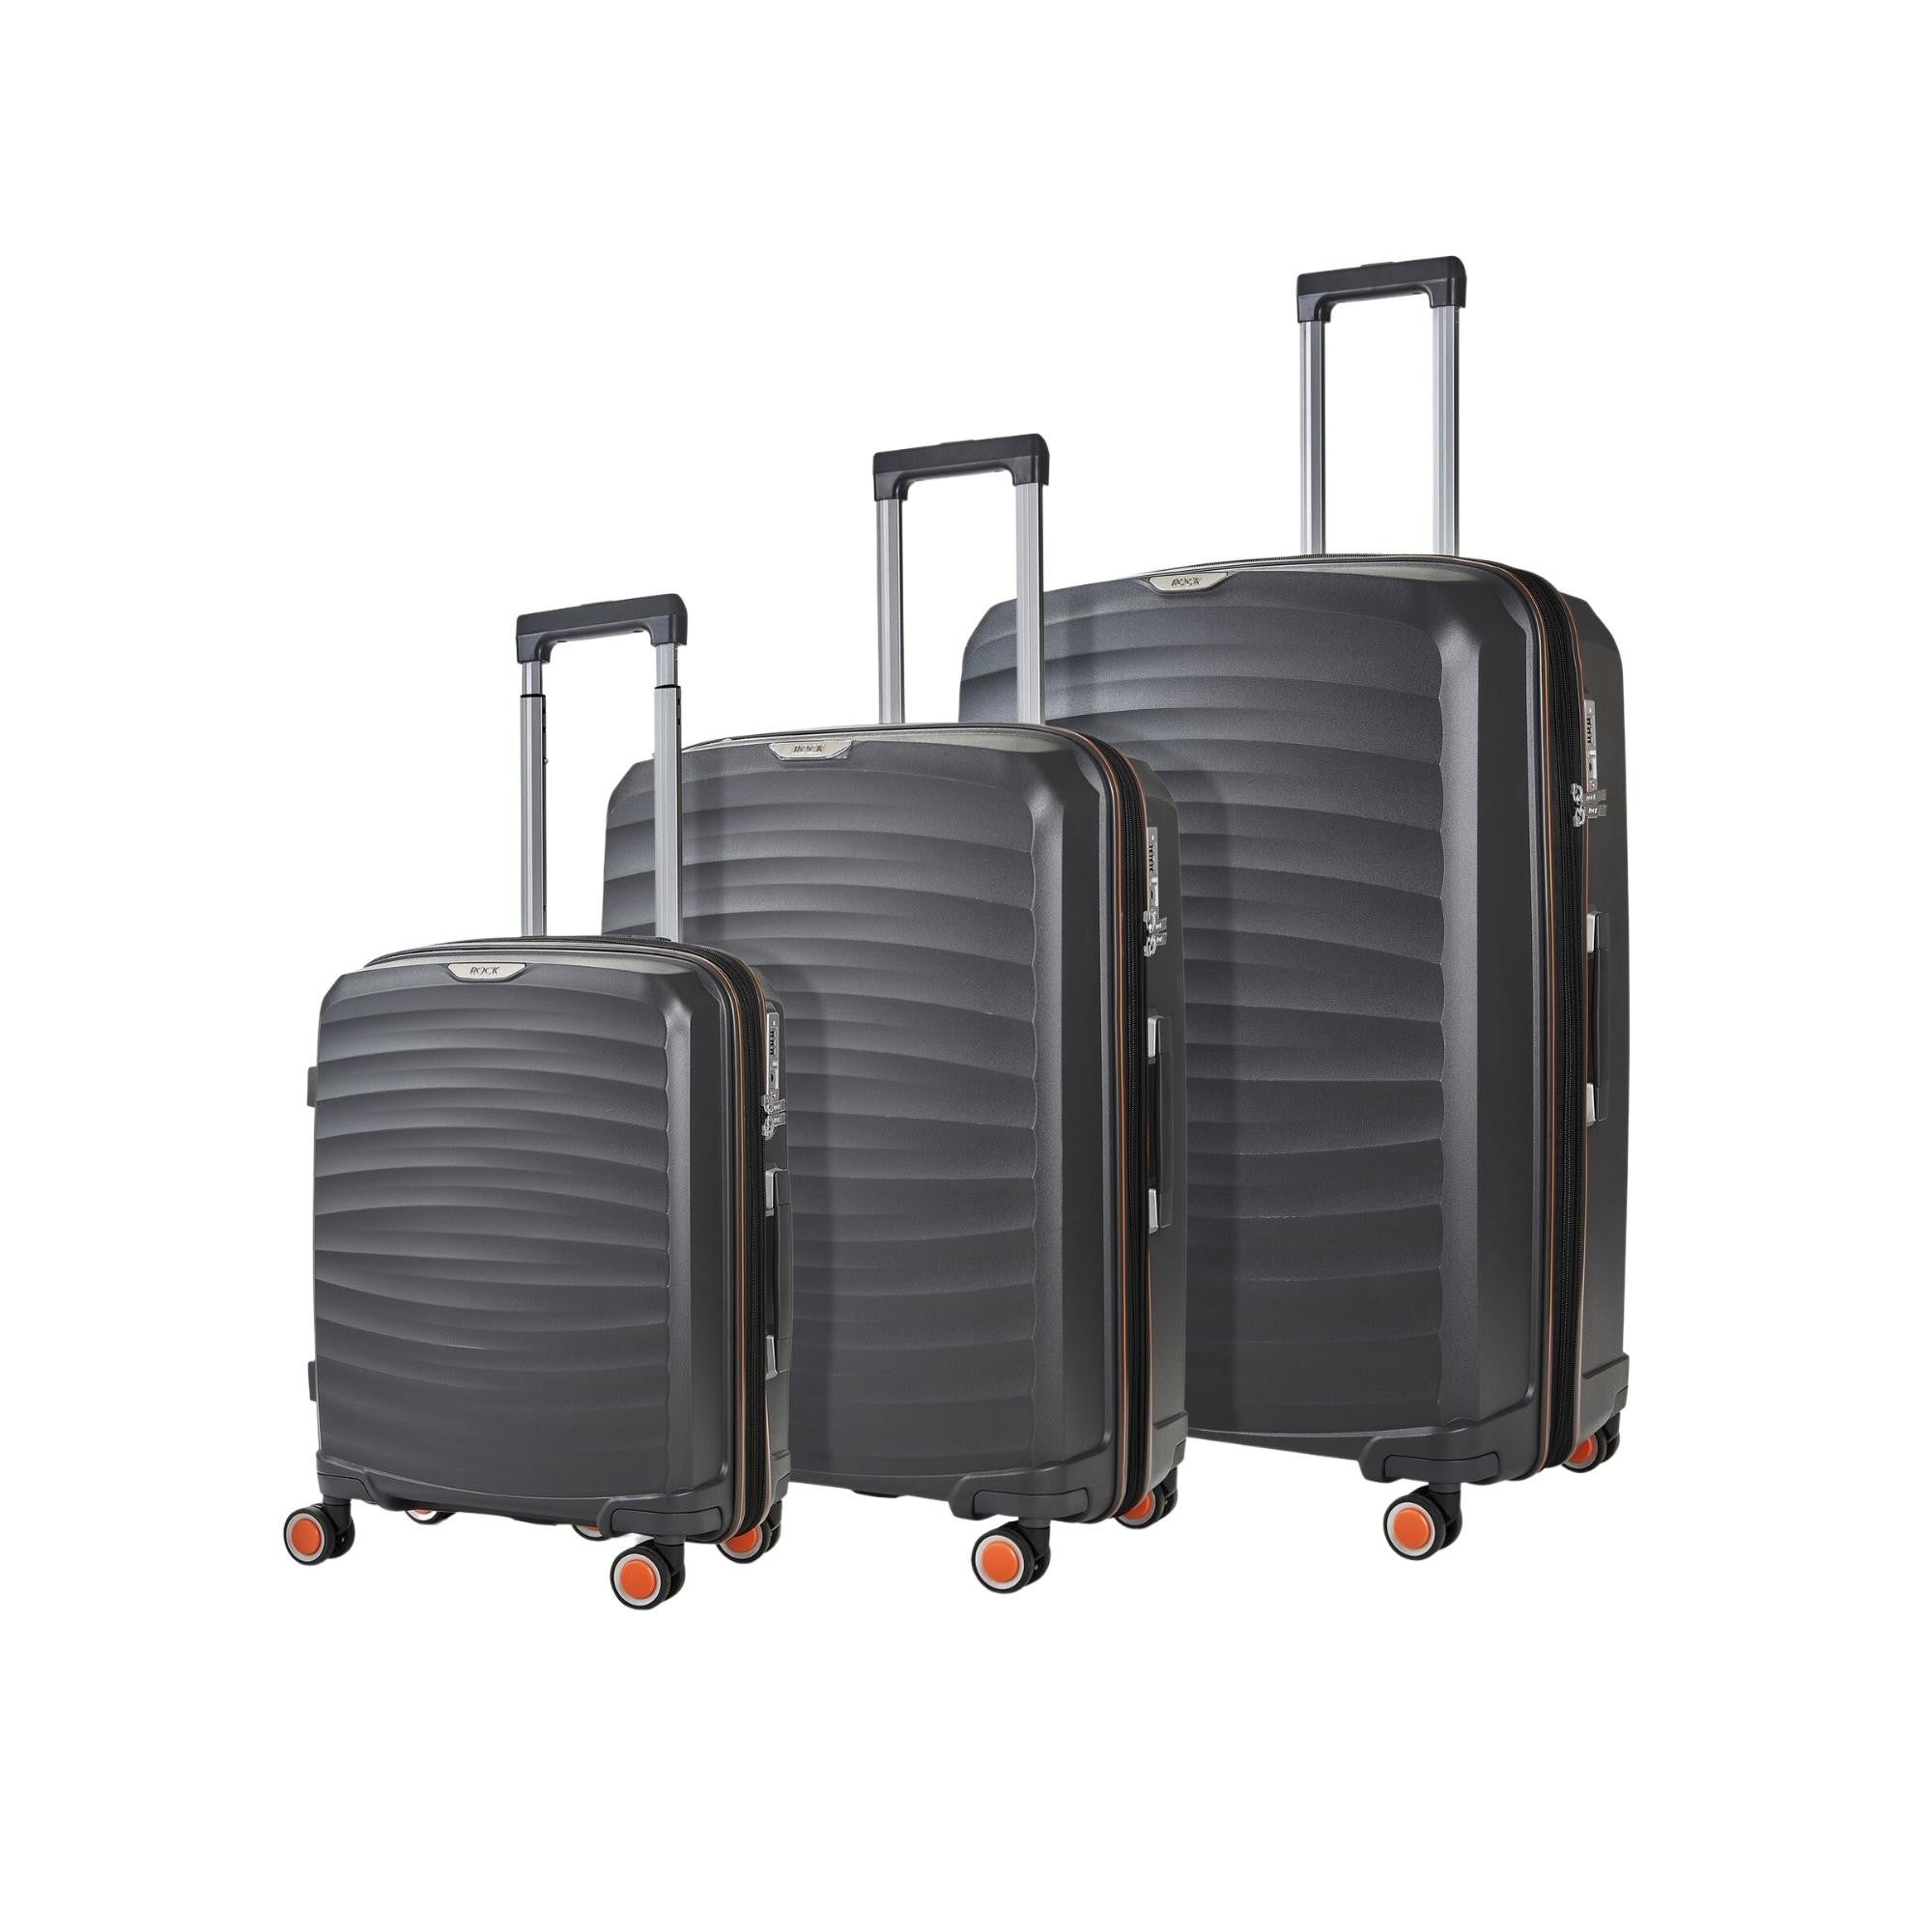 Rock Luggage Sunwave Set of 3 Suitcases Charcoal